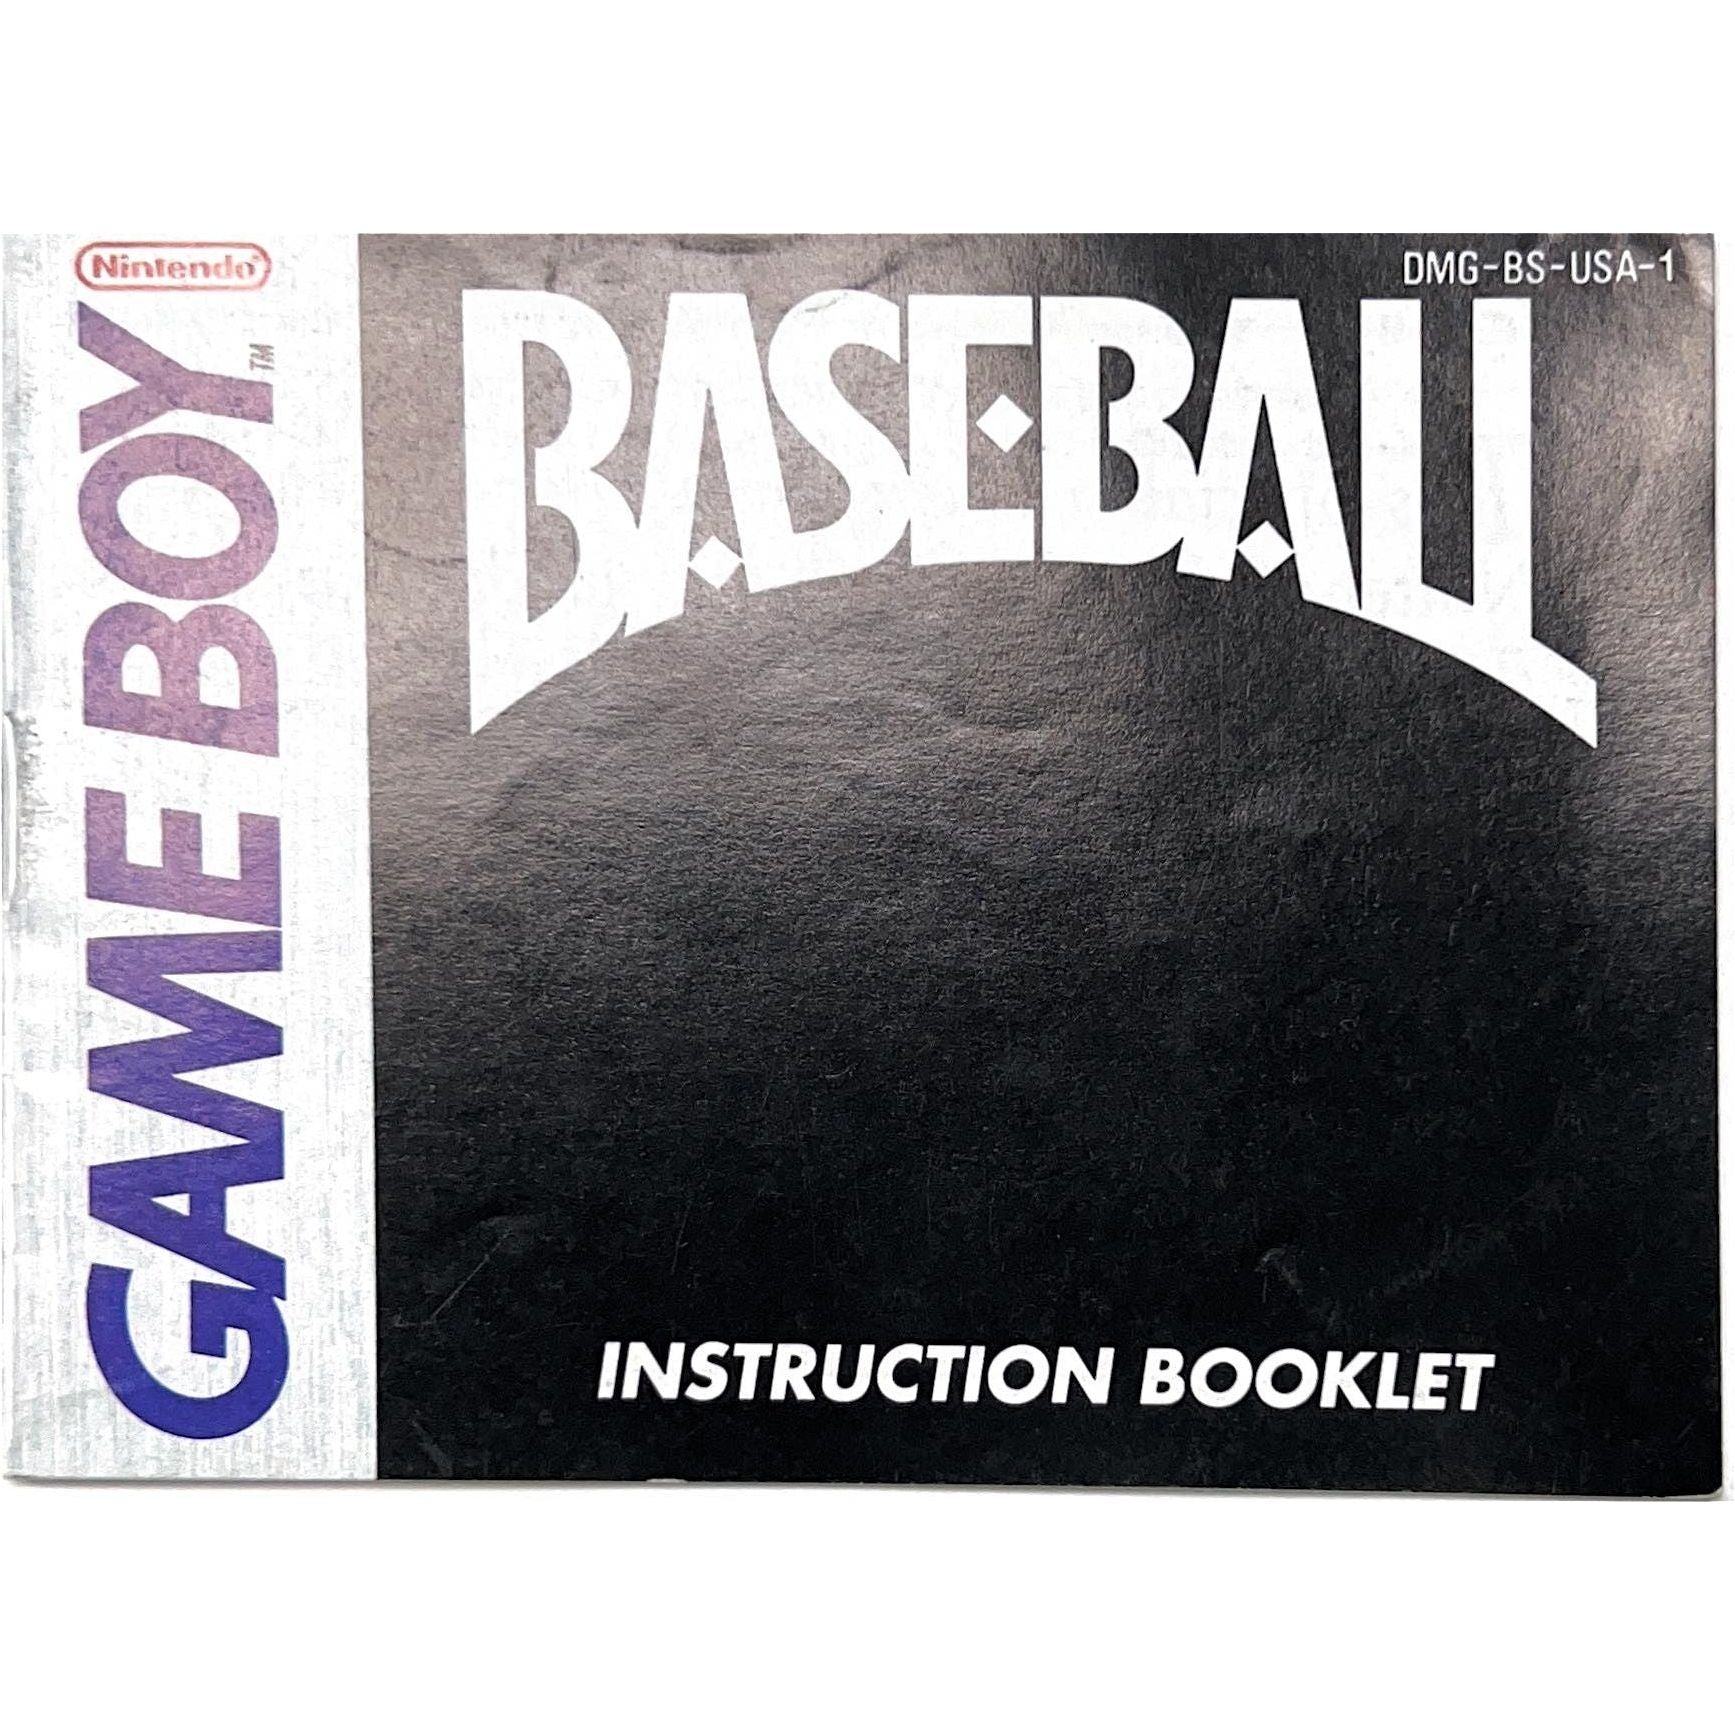 GB - Baseball (Manual)